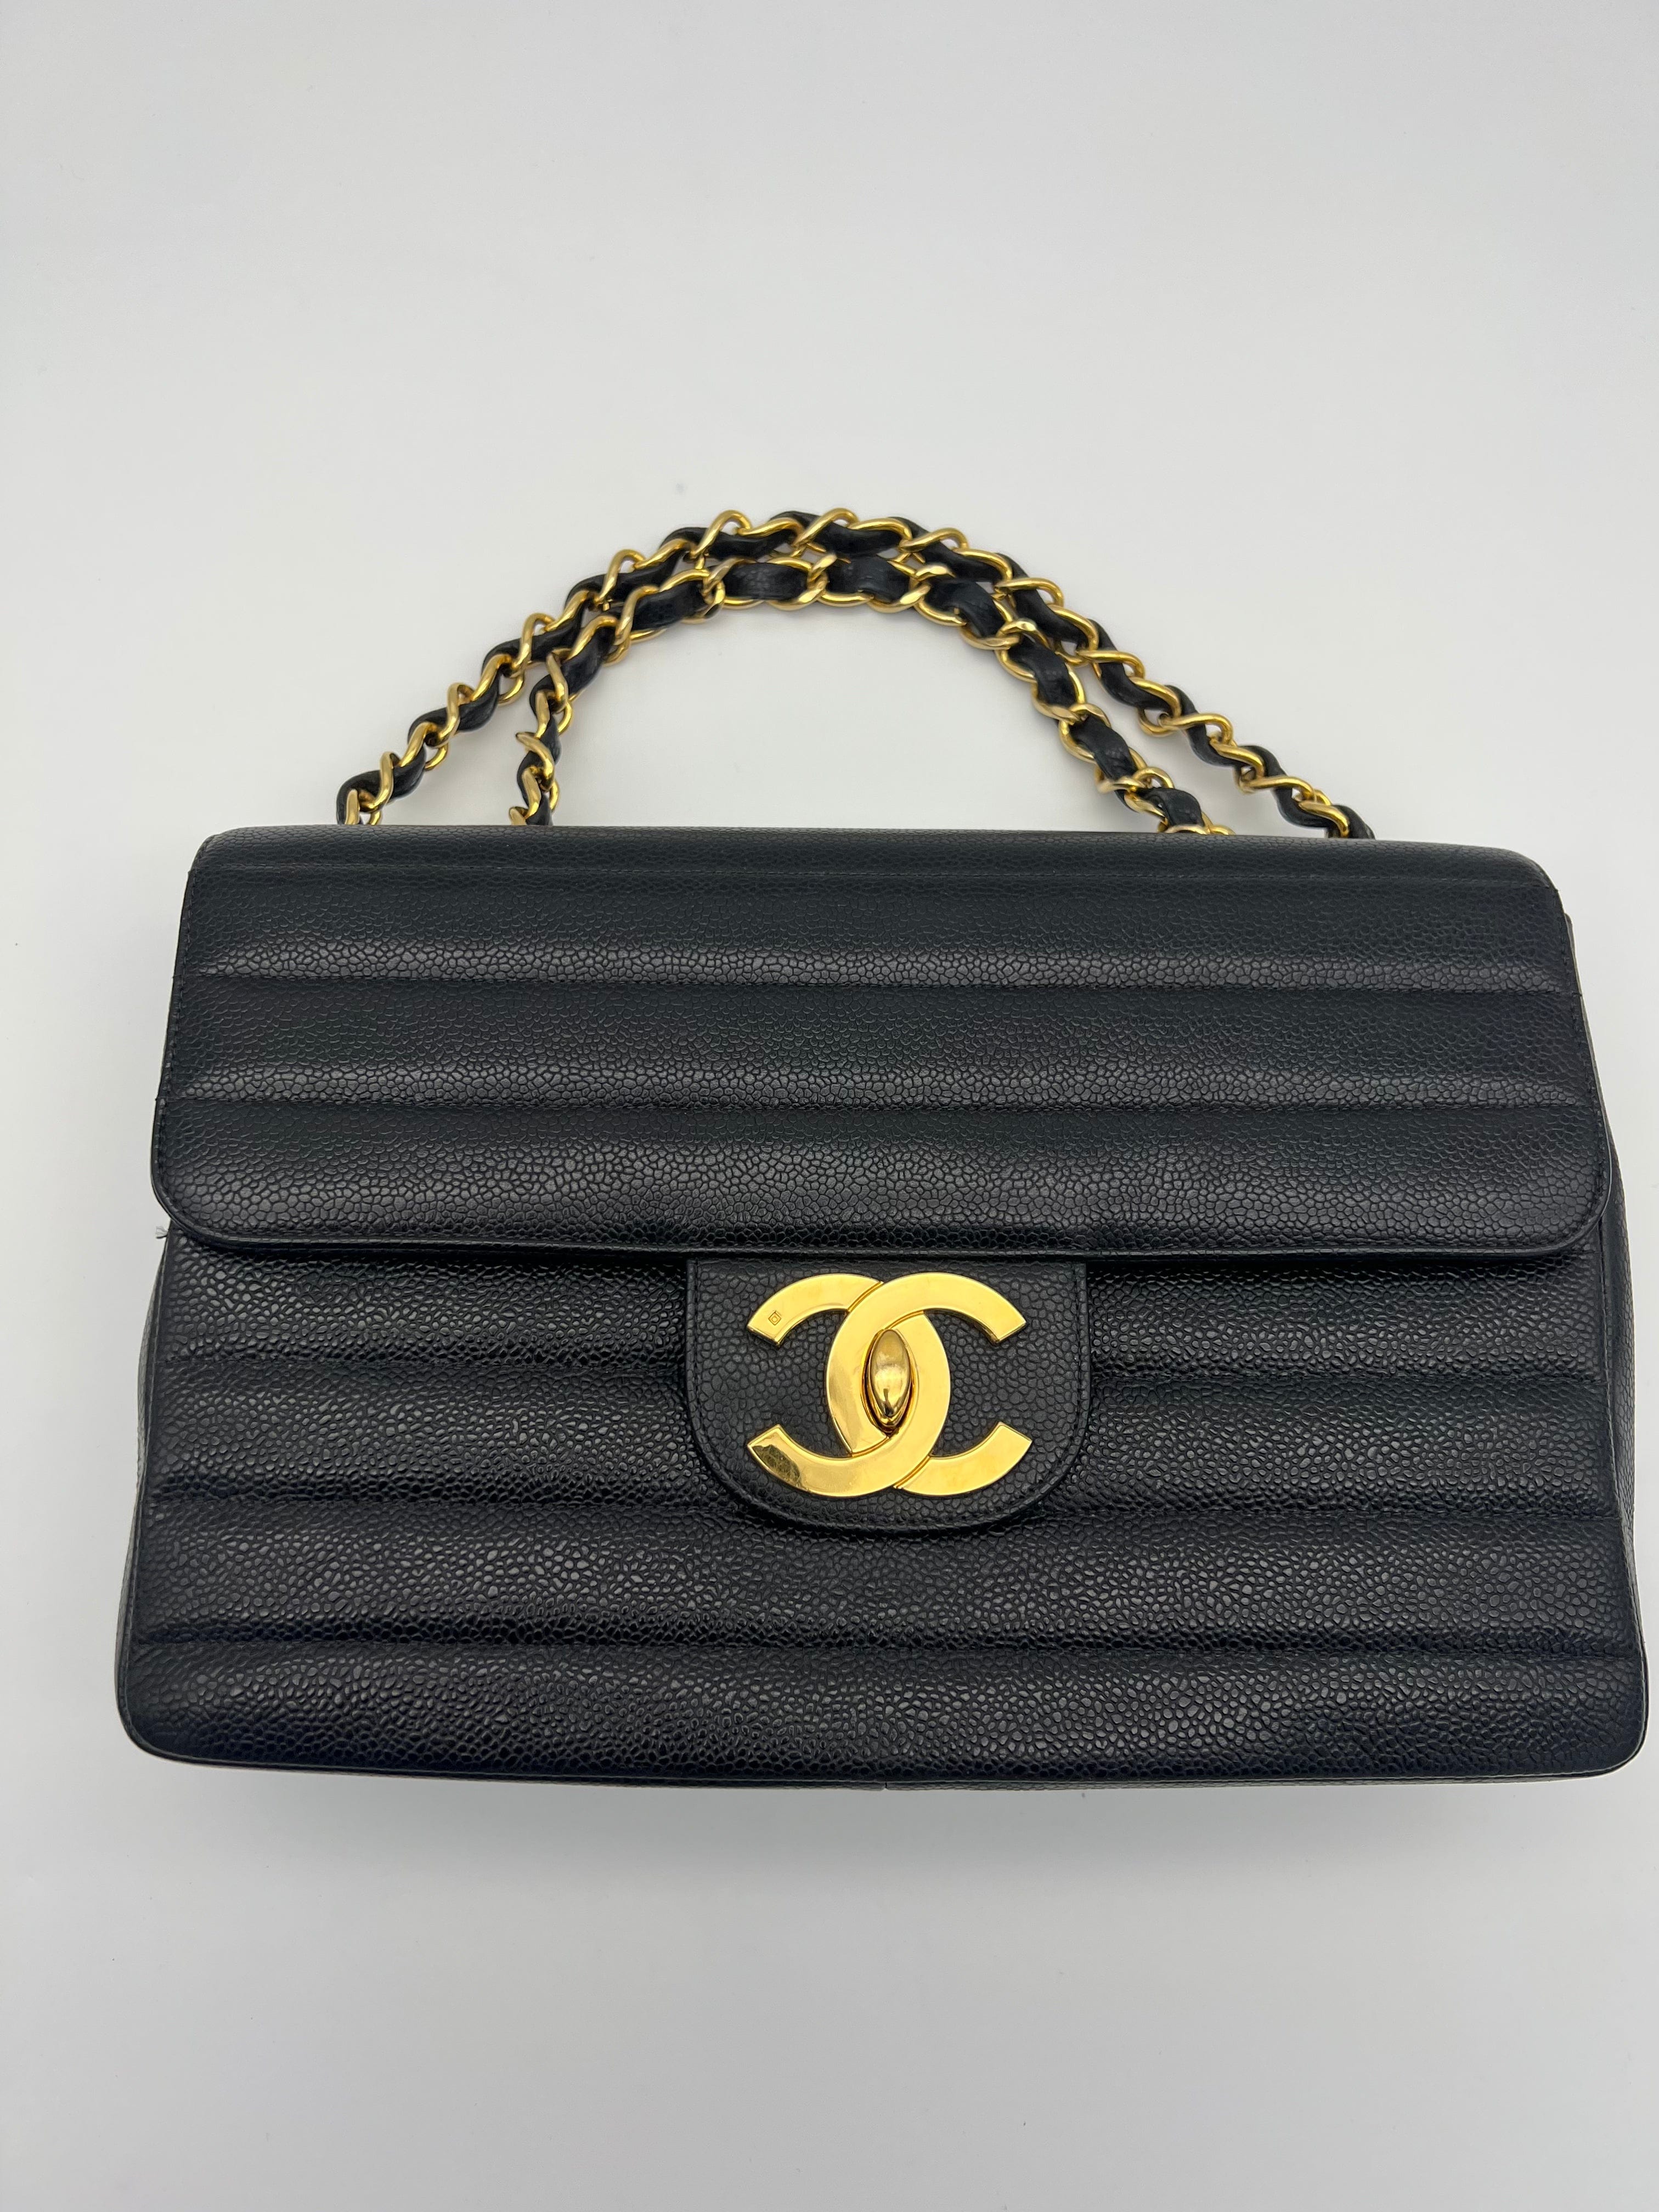 Chanel Chanel Classic Flap Jumbo Mademoiselle Shoulder Bag ASL3144